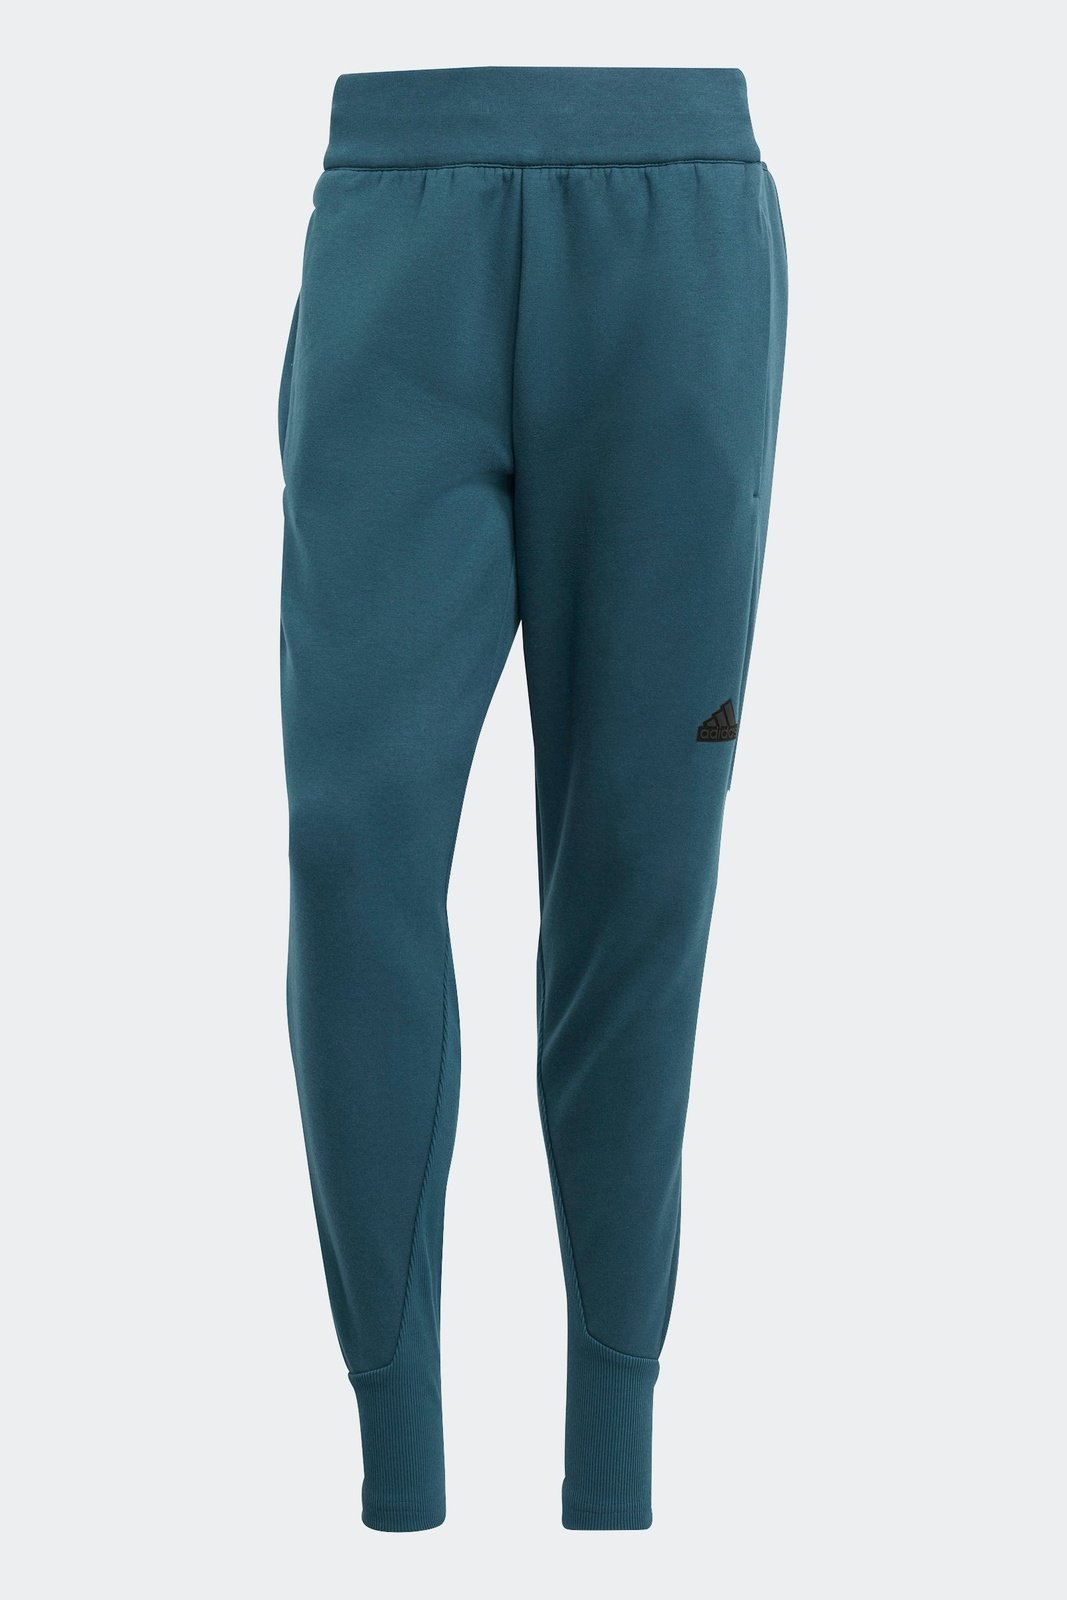 ADIDAS - מכנסיים ארוכים לגברים Z.N.E PREMIUM בצבע כחול - MASHBIR//365